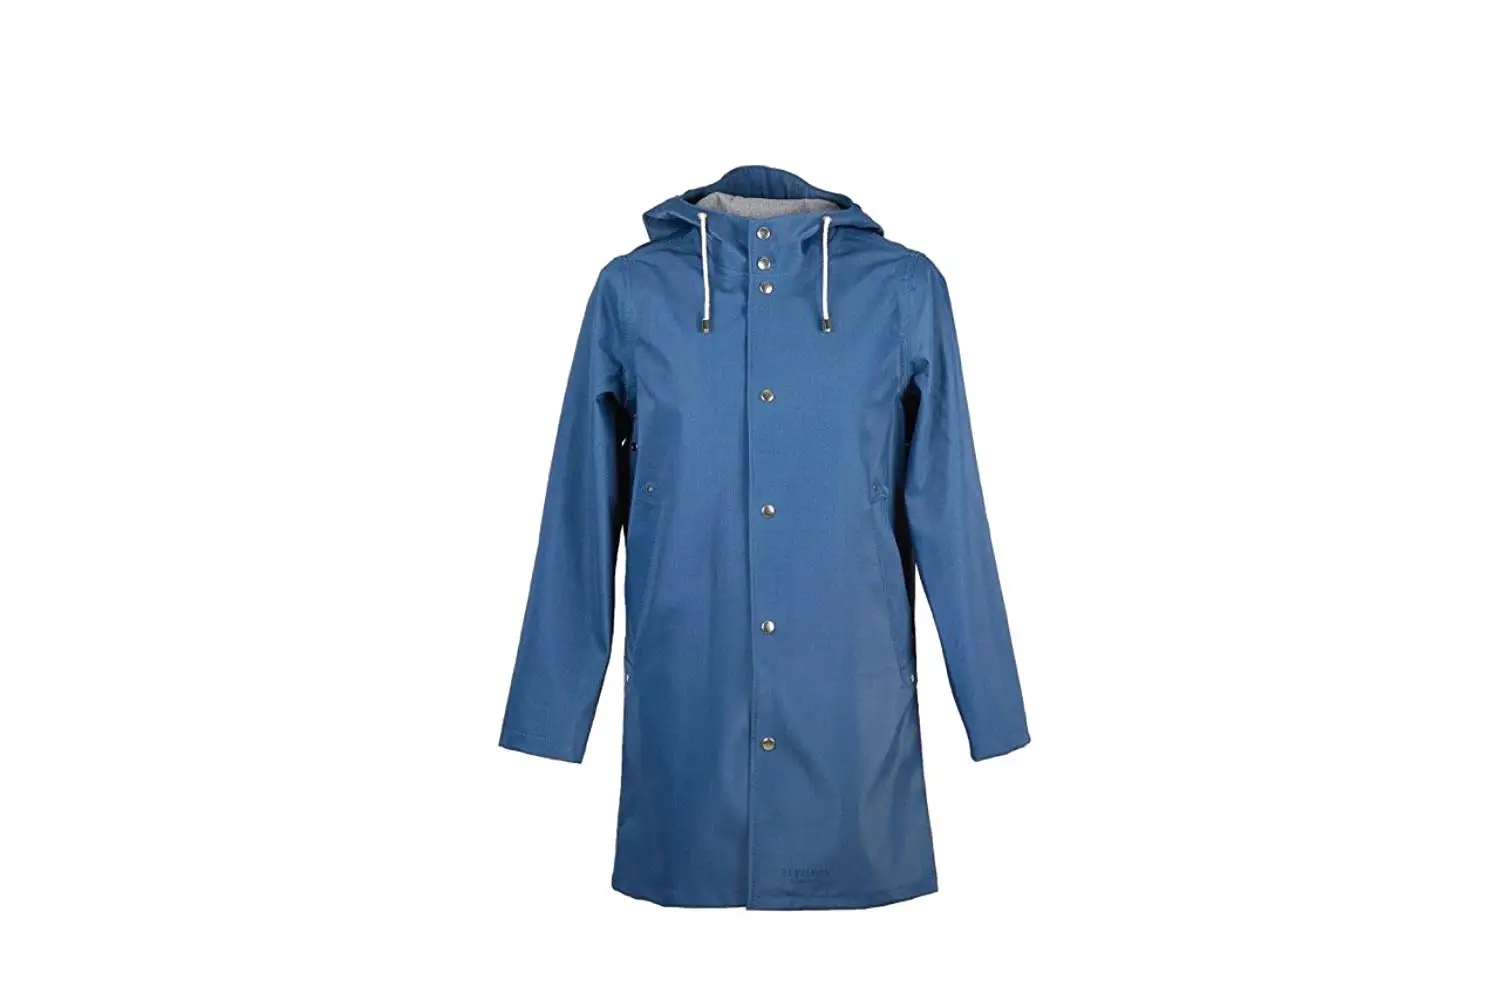 Cheap Vintage Raincoat, find Vintage Raincoat deals on line at Alibaba.com